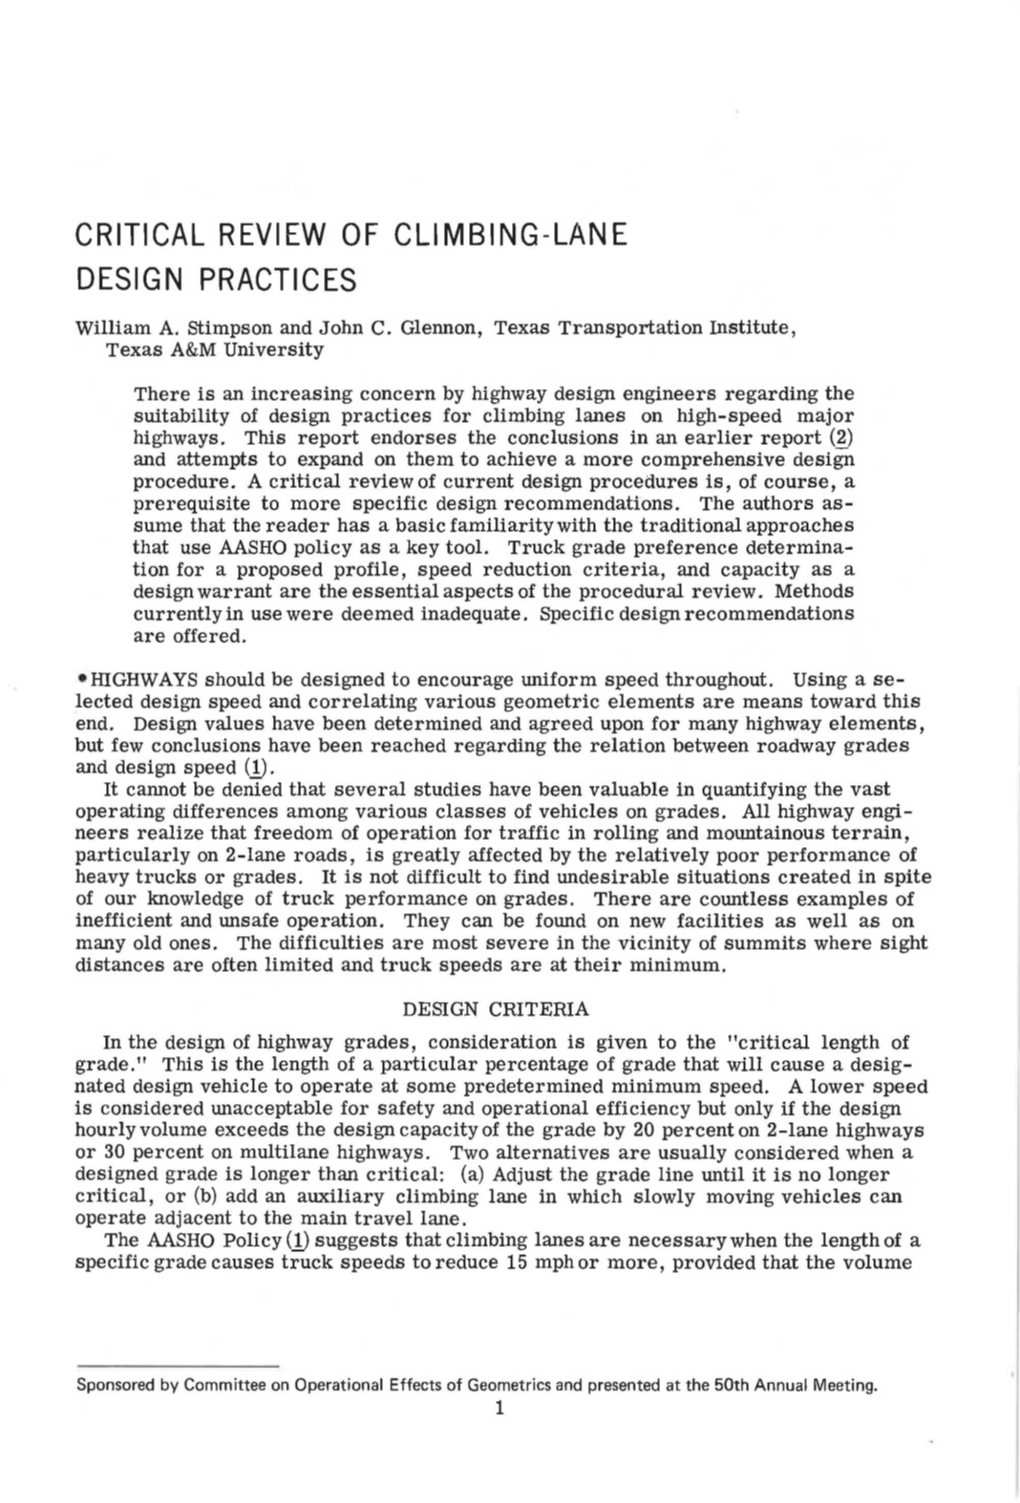 Critical Review of Climbing-Lane Design Practices